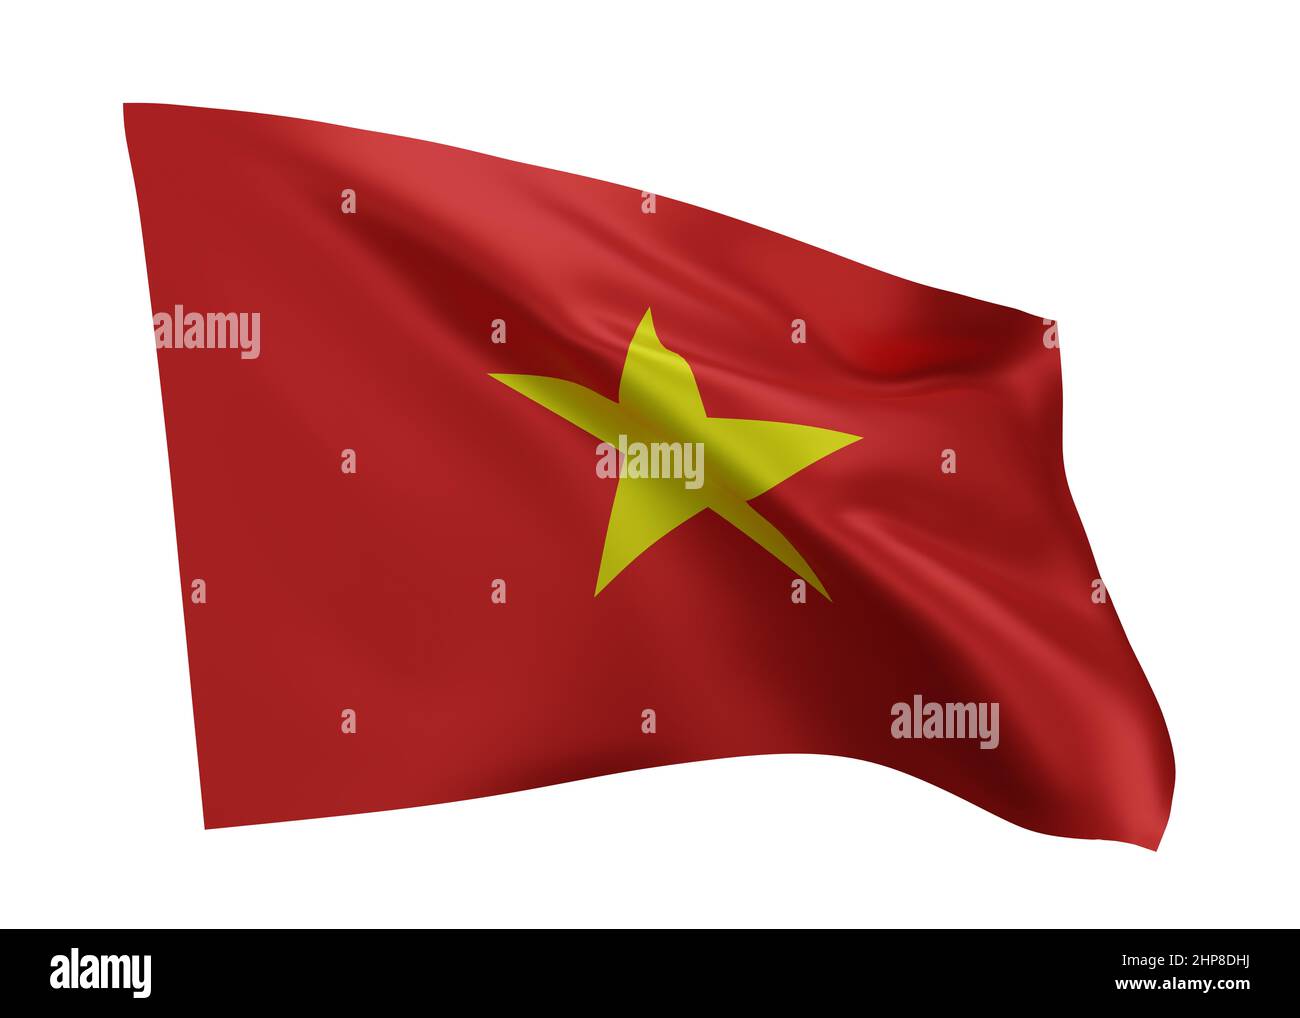 3d illustration flag of Vietnam. Vietnamese high resolution flag isolated against white background. 3d rendering Stock Photo